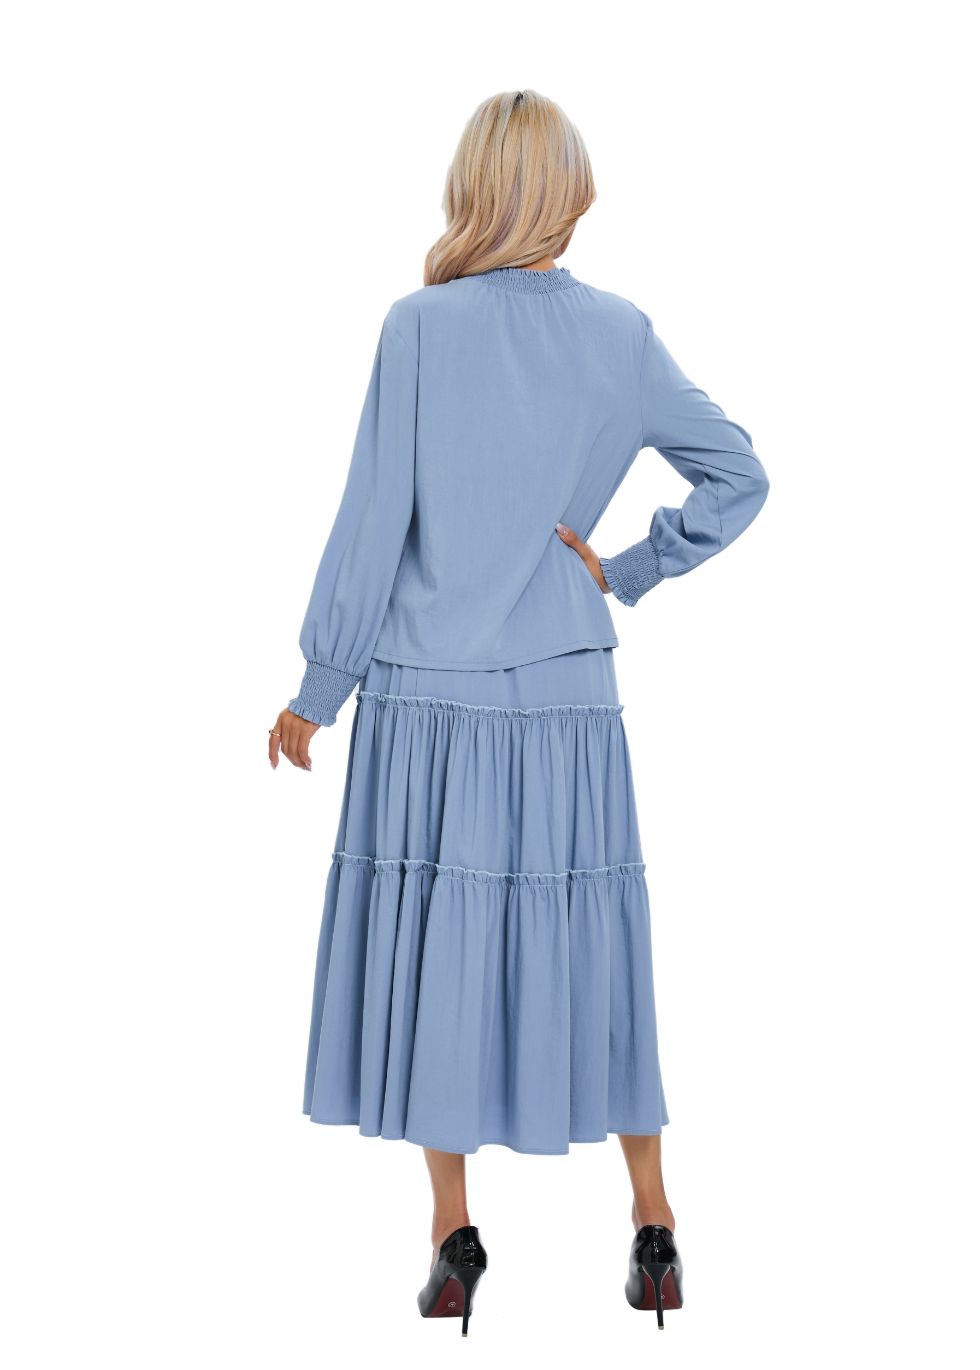 Long Sleeve Top and Tiered Skirt Midi Dress Set - MissFinchNYC